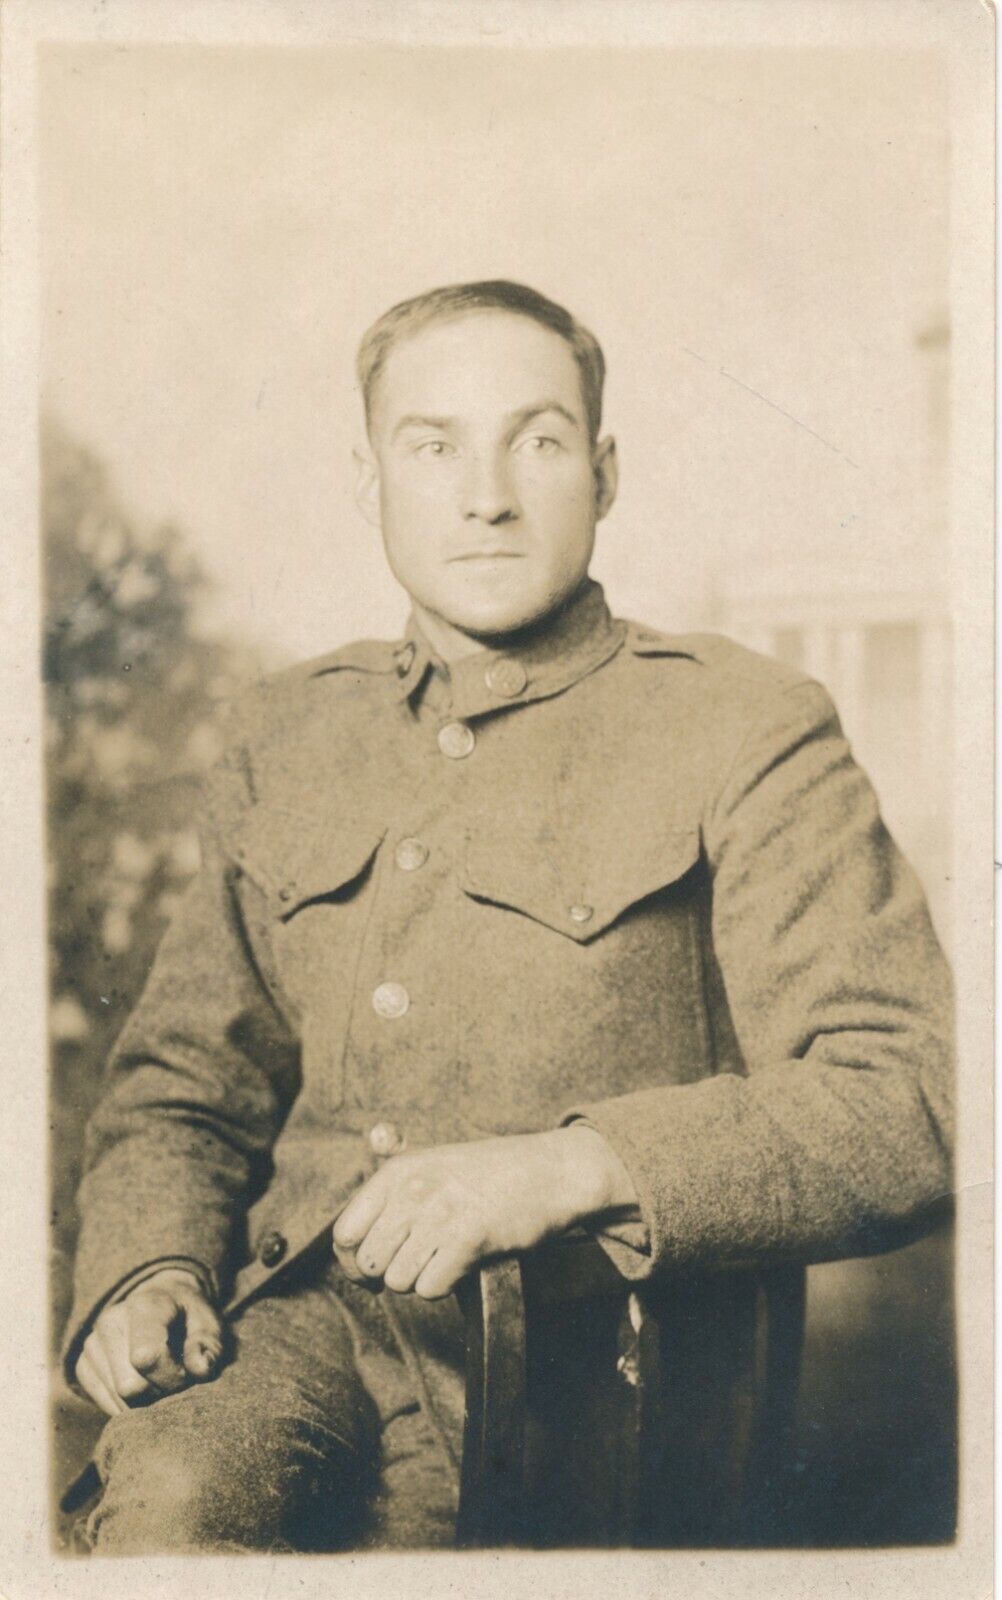 c1914-1918 WWI World War One Soldier in Uniform Photograph